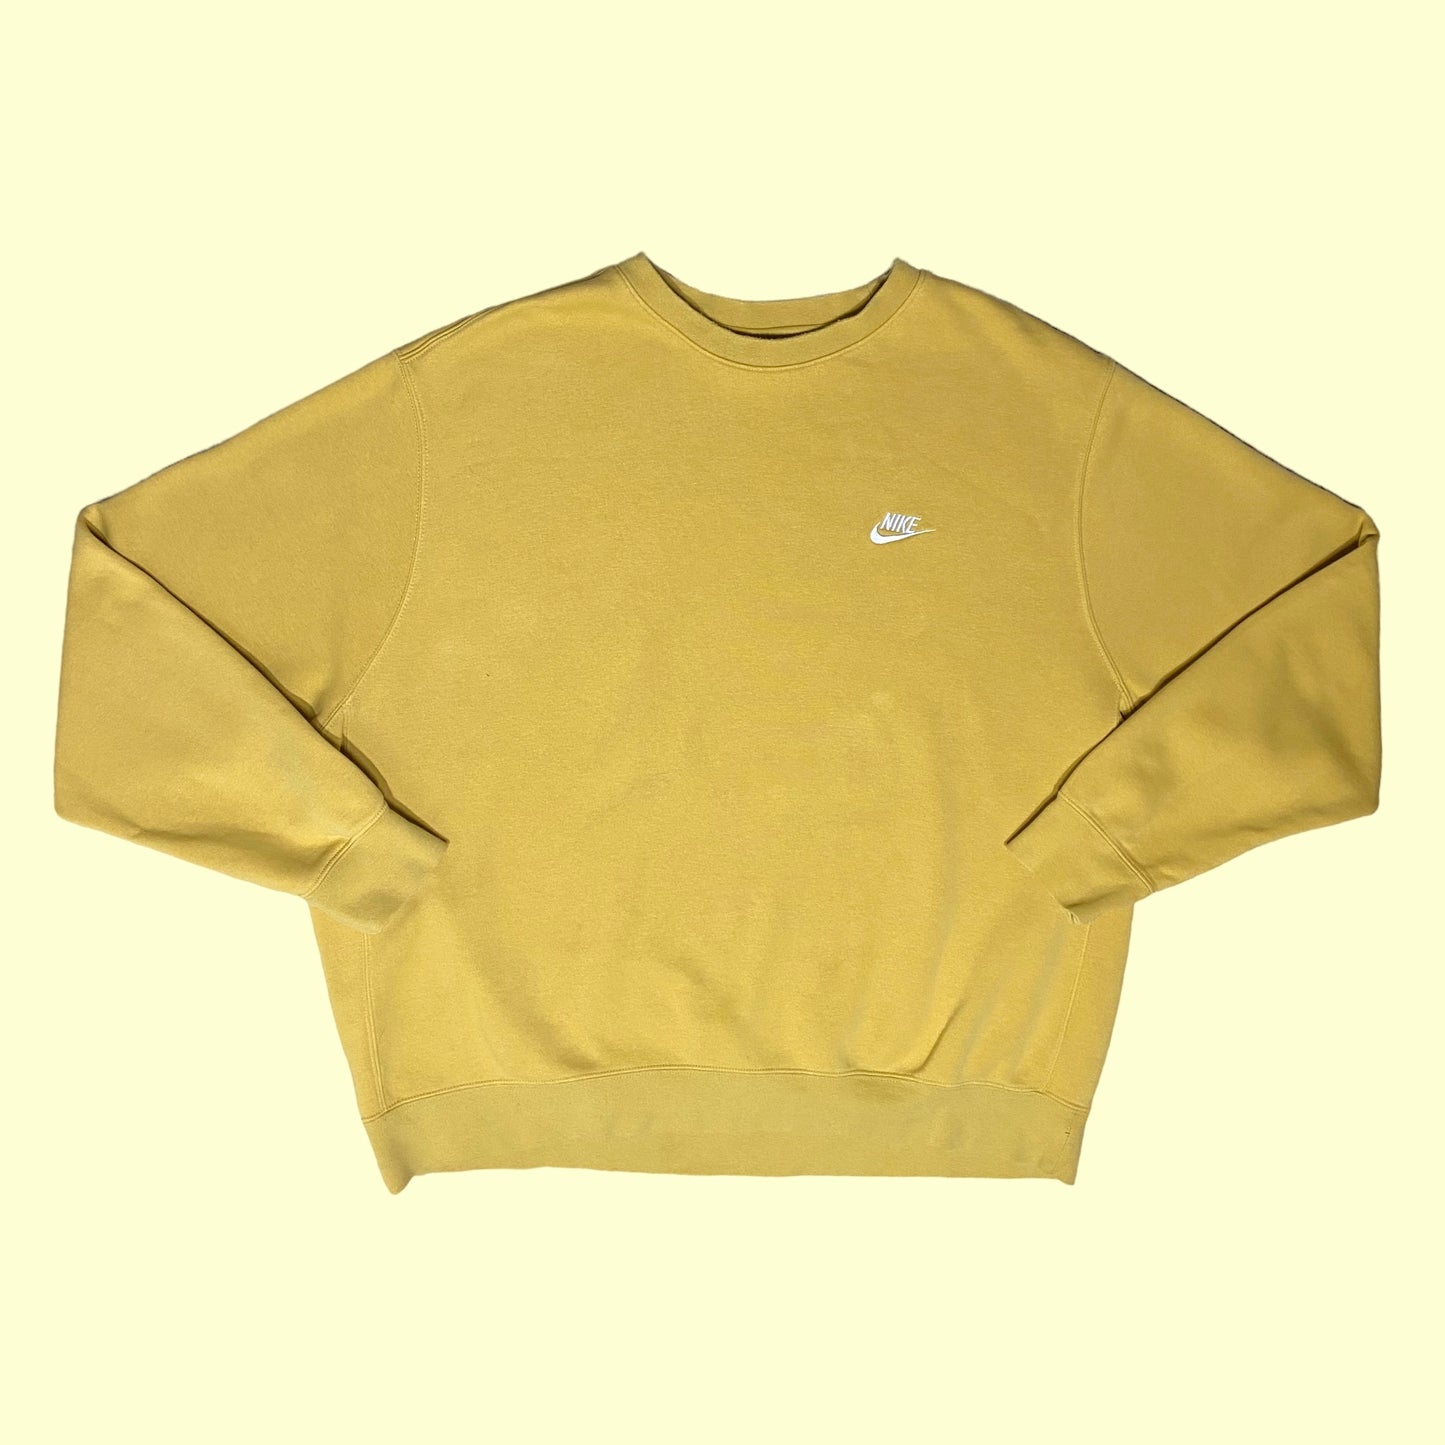 Vintage nike sweater - 2XL